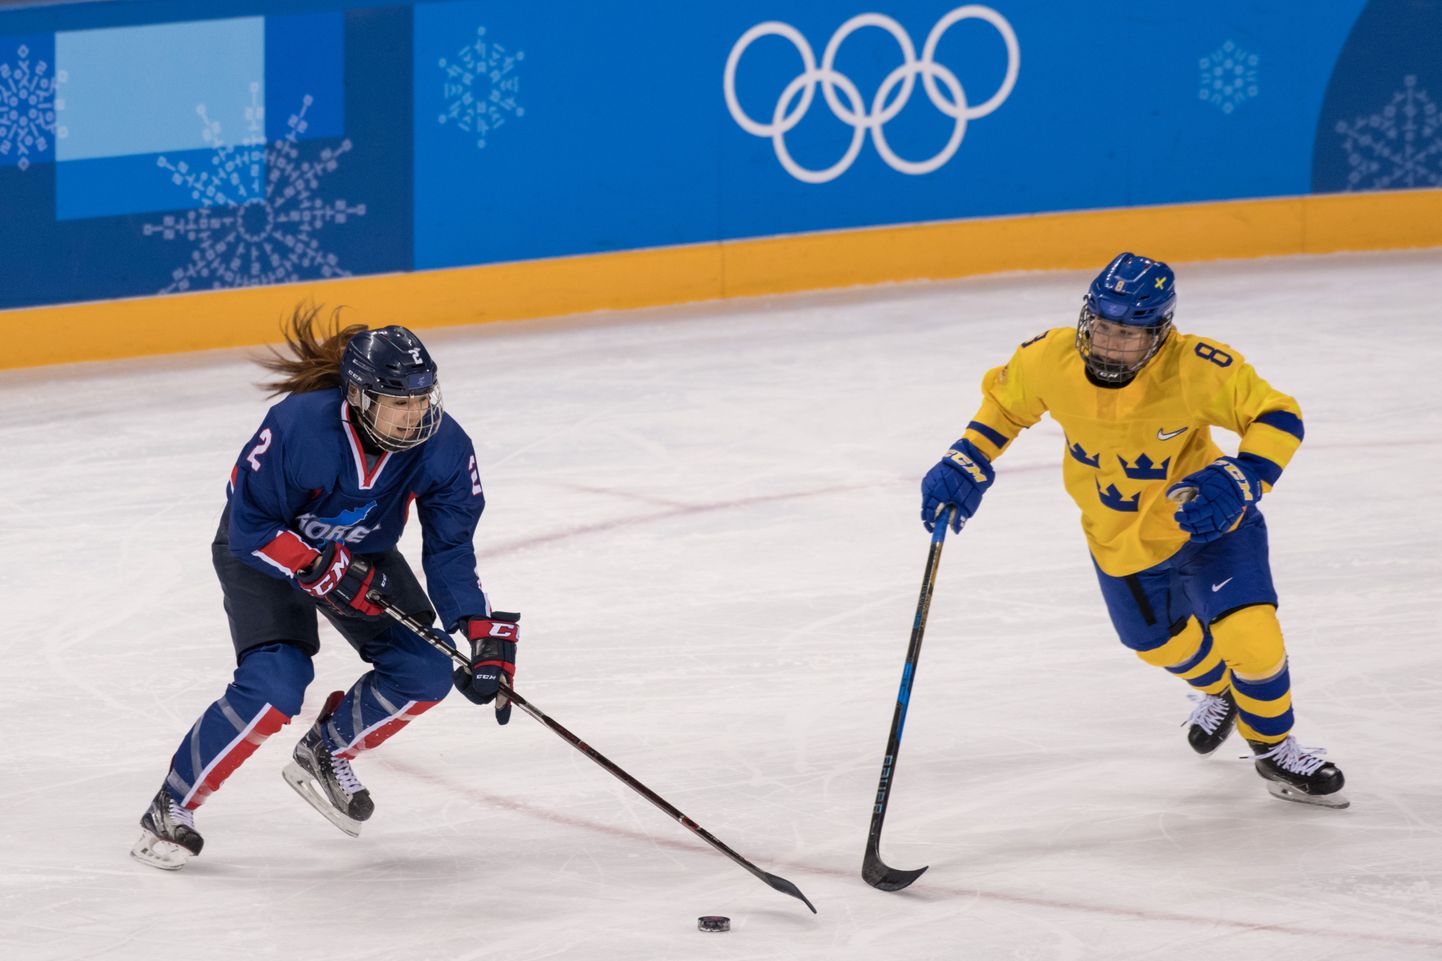 Rootsi - Korea naiste jäähokimäng.